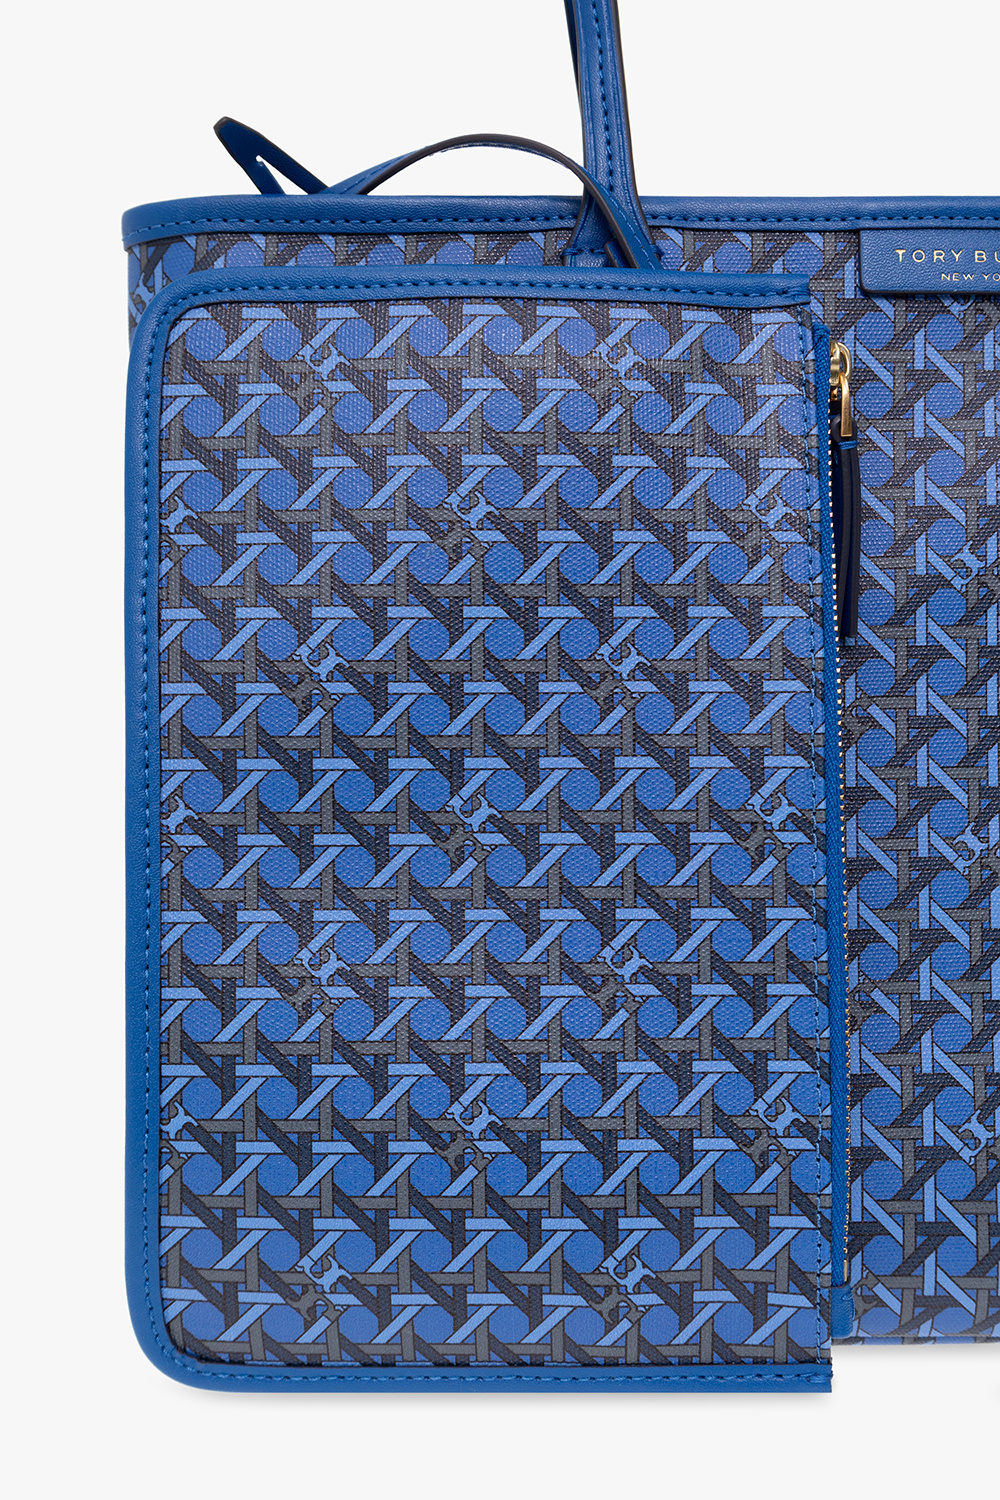 Tory Burch Basketweave-Pattern Tote Bag - Blue